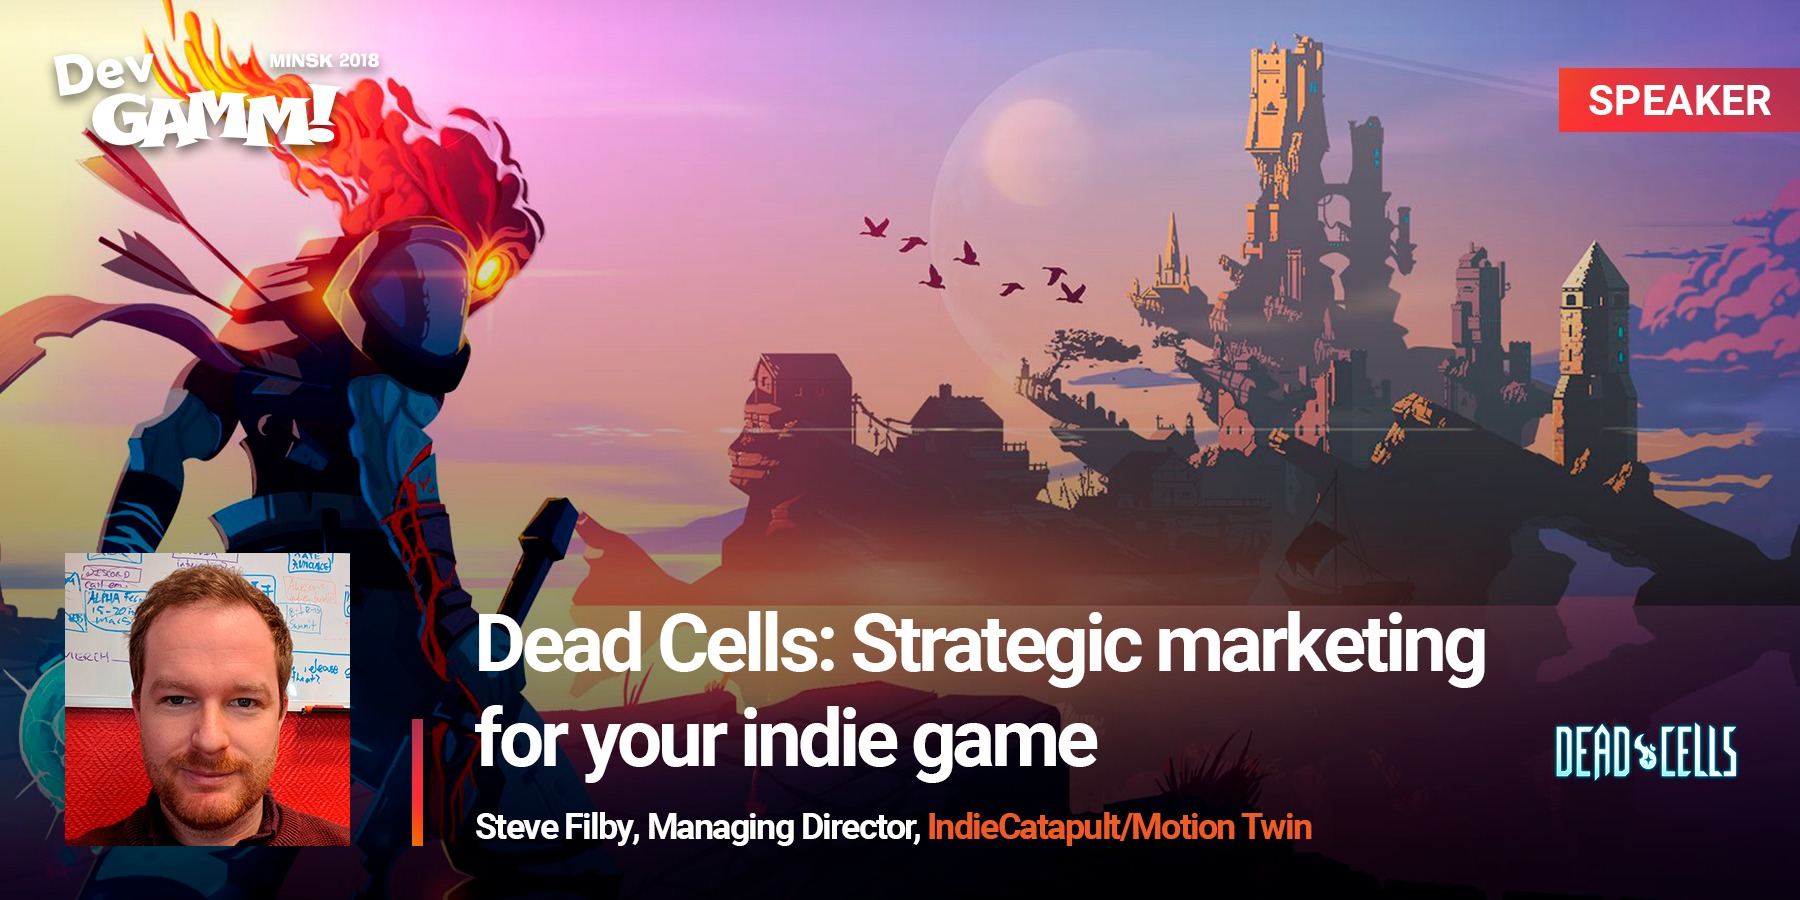 Стив Филби говорит о маркетинге Dead Cells